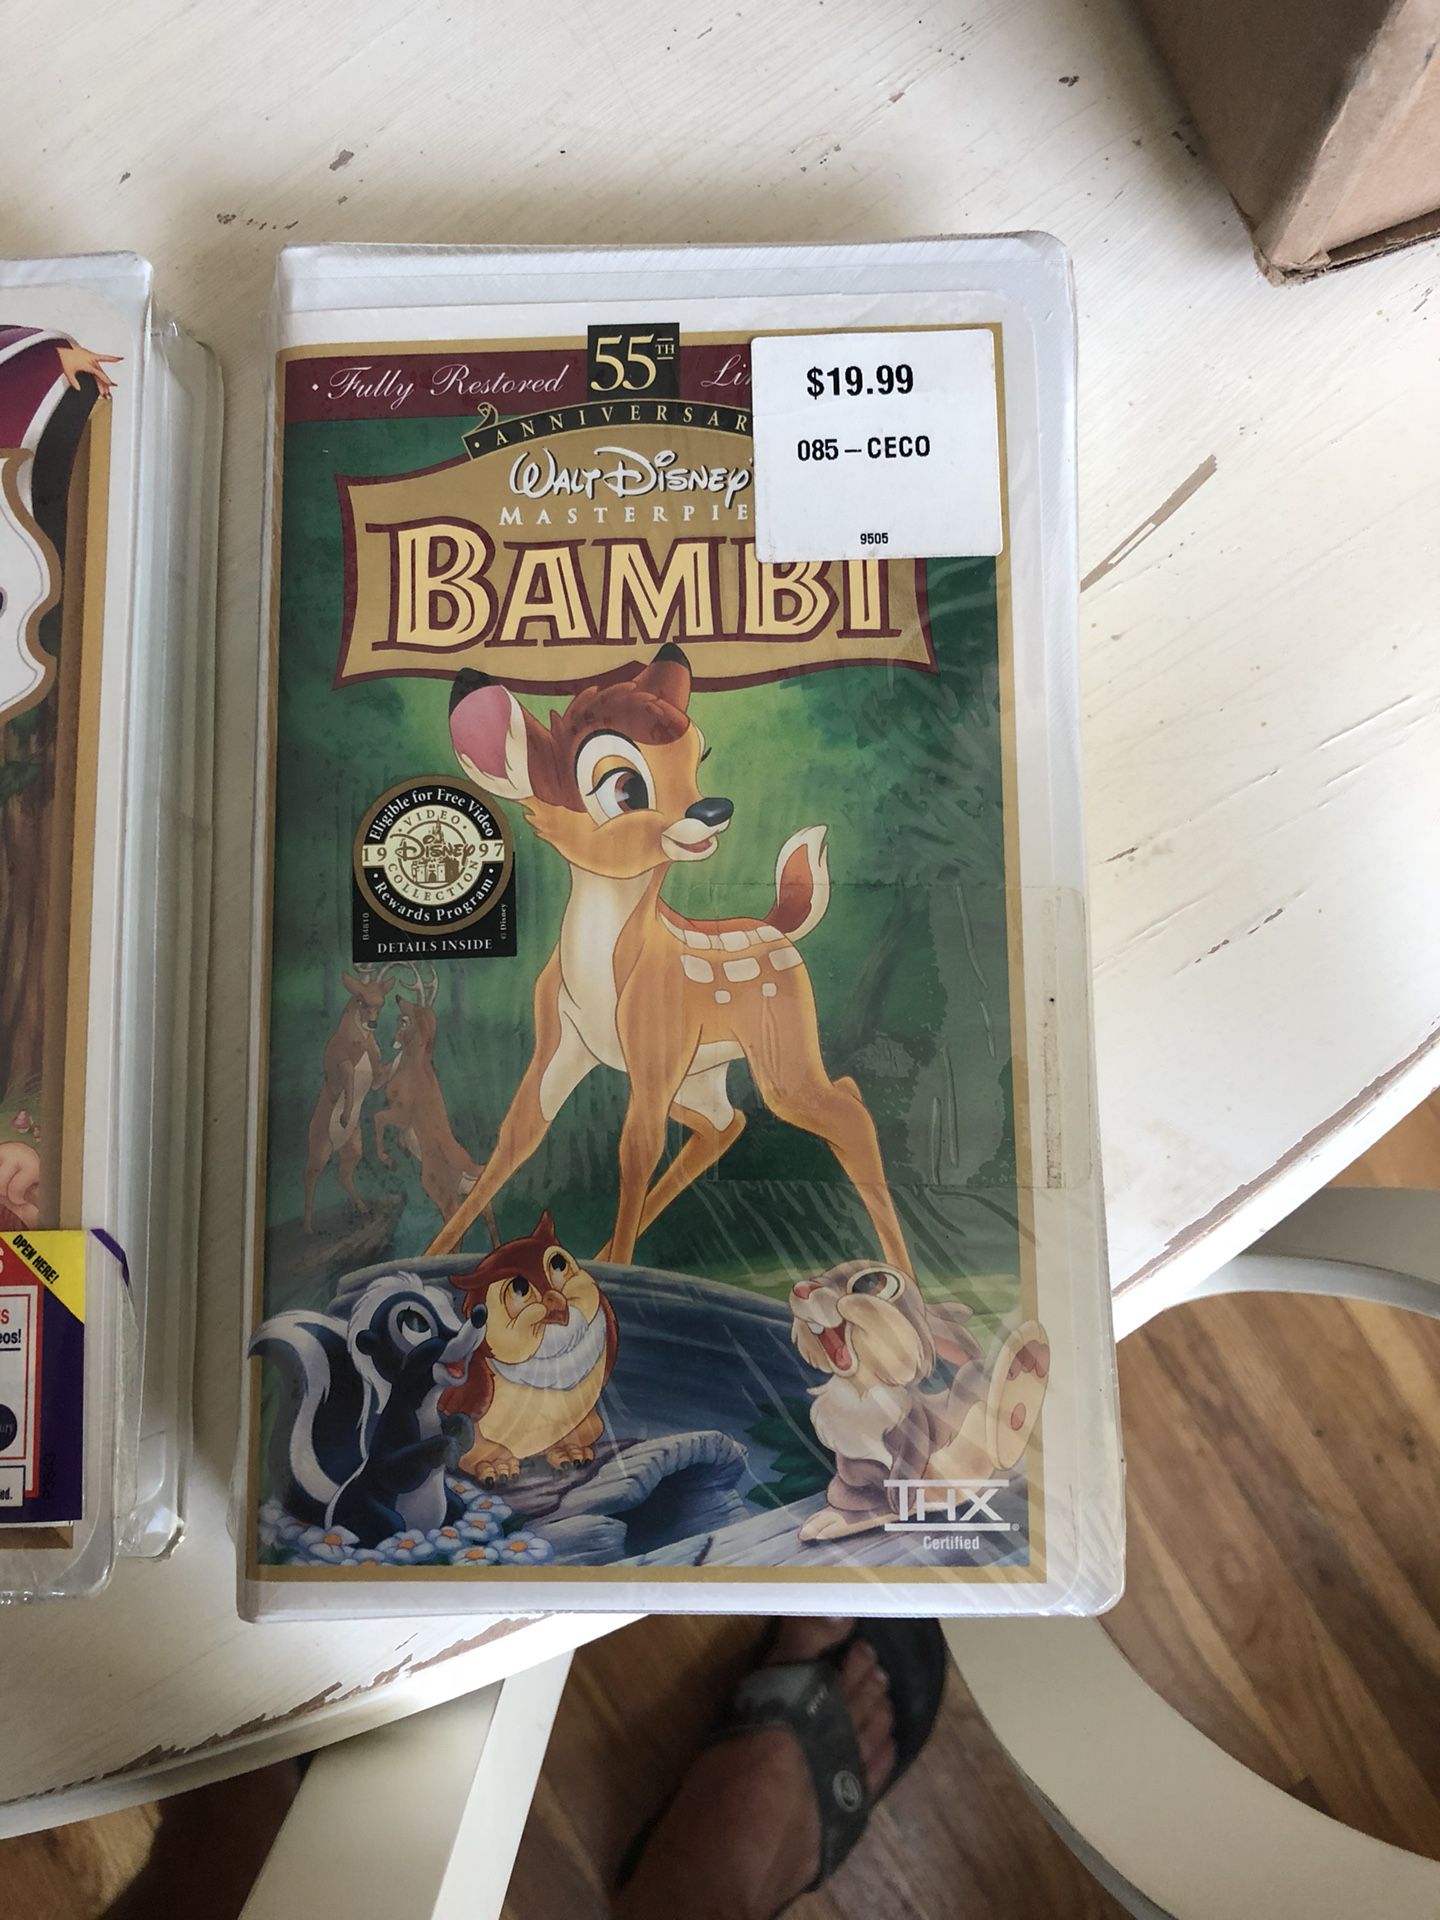 Brand new Disney VHS movies